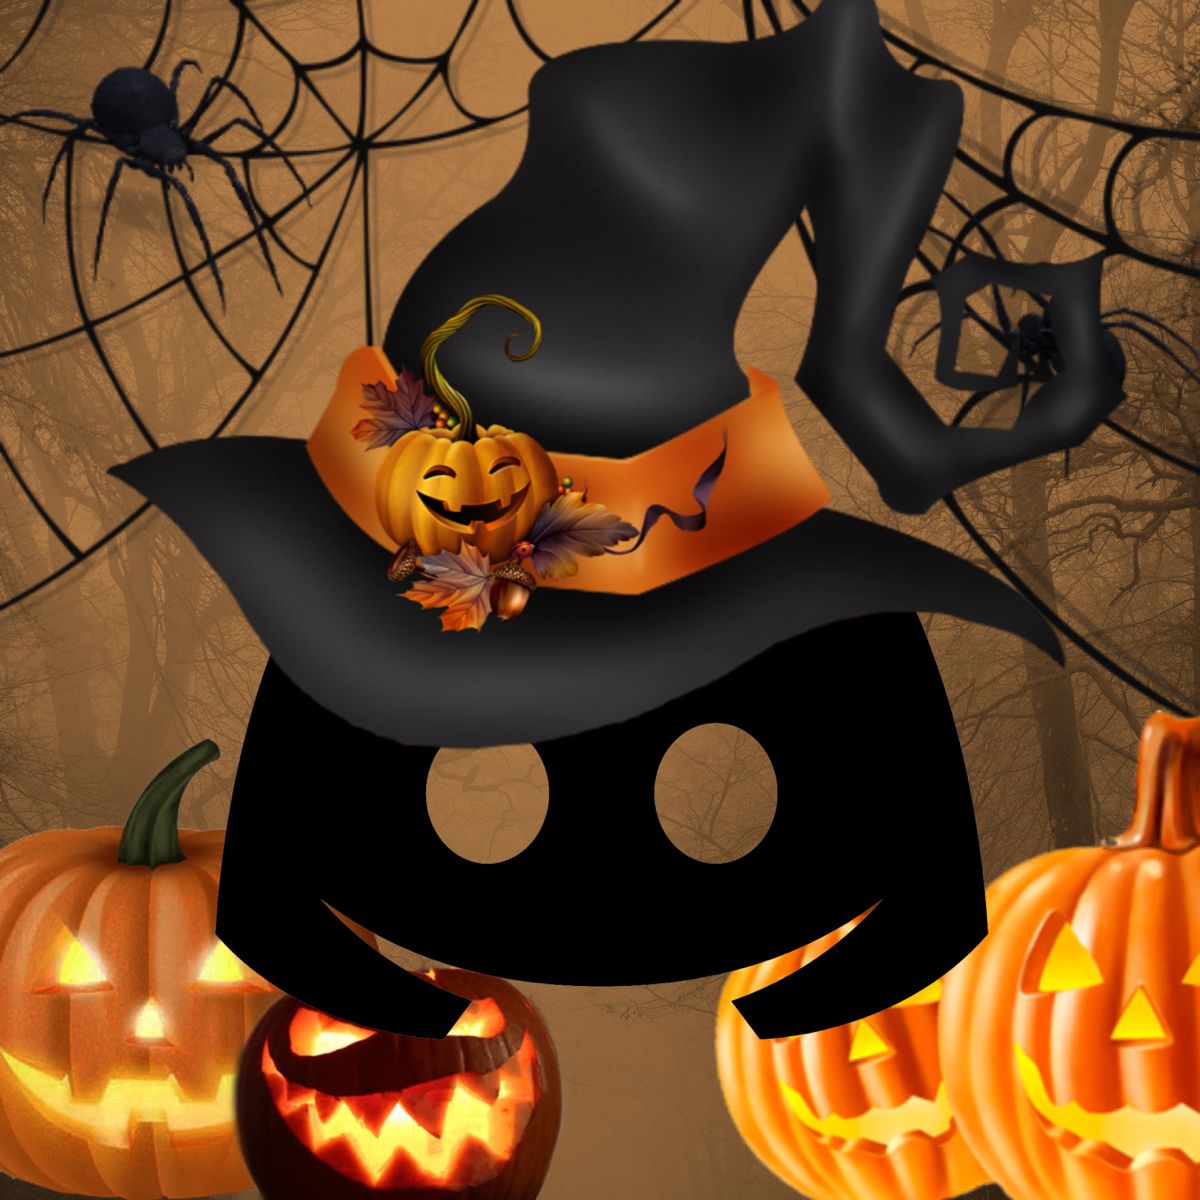 Discord Halloween Icon. Halloween icons, iPhone icon, App icon